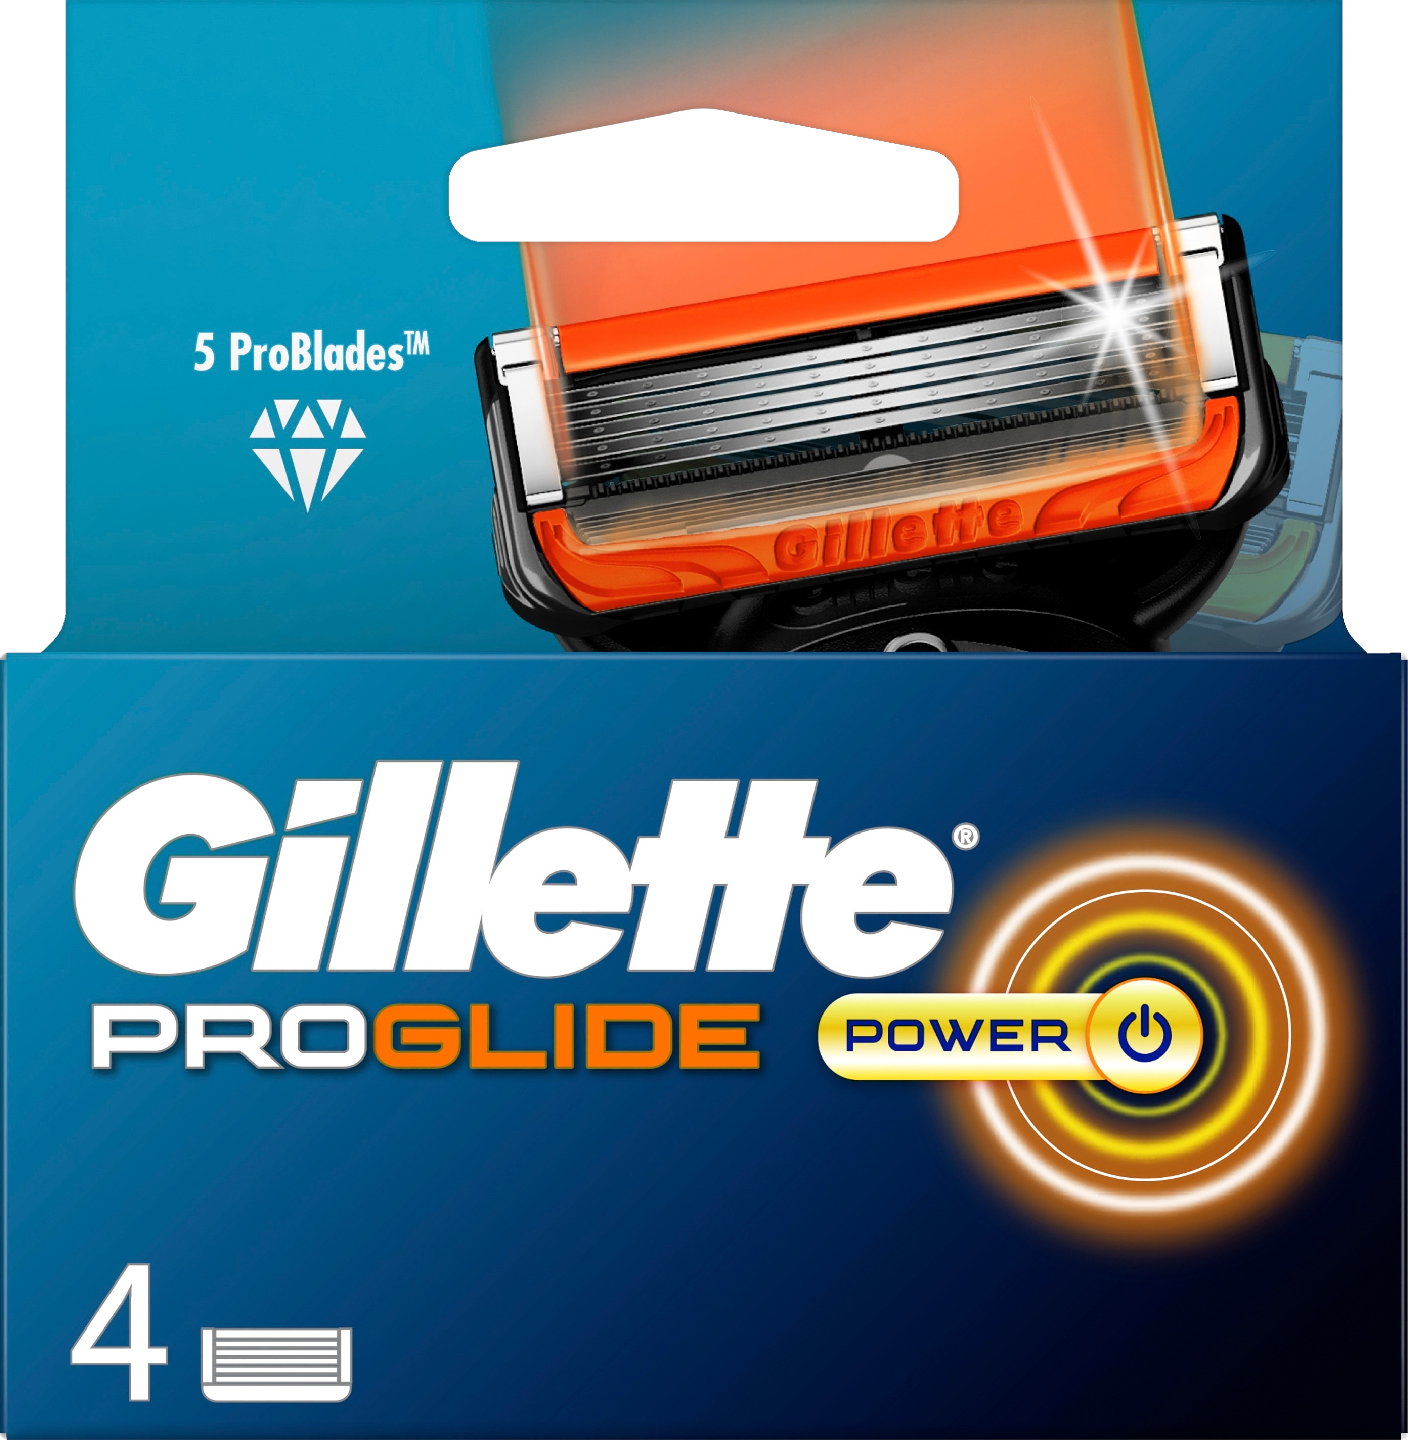 Gillette Fusion5 Proglide Power terä 4kpl